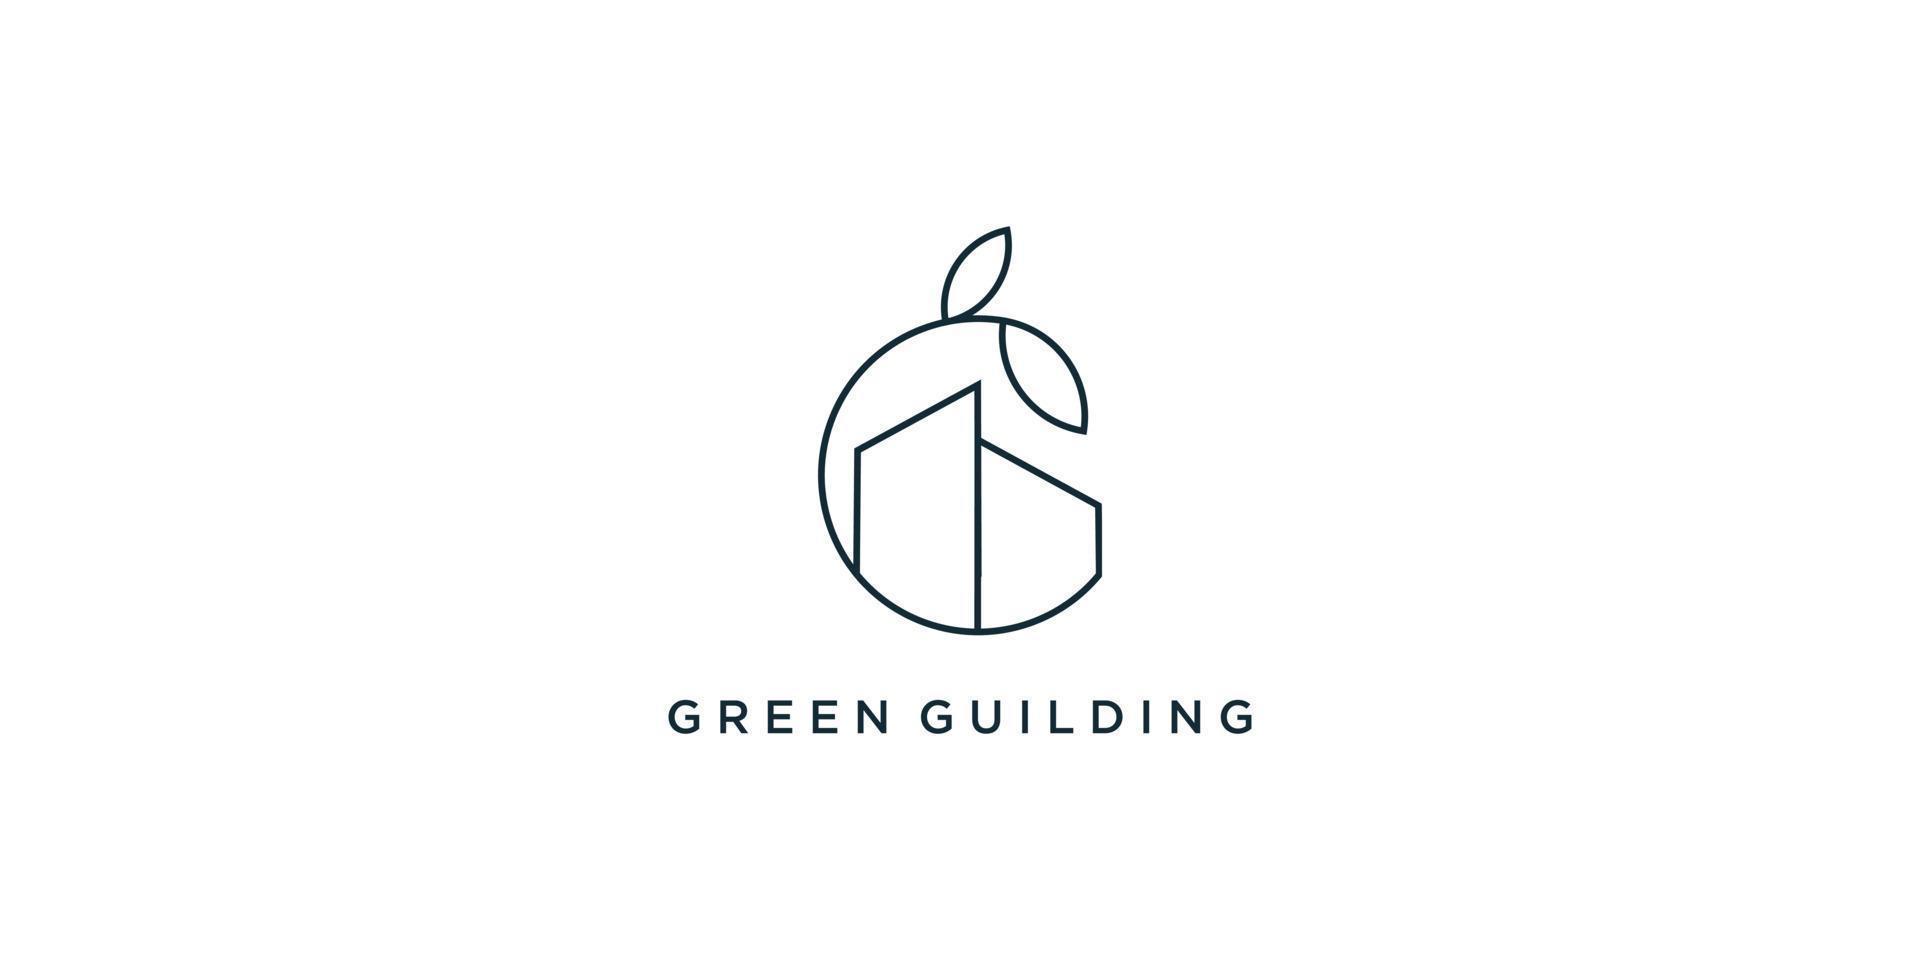 Green building logo design with creative line style Premium Vector